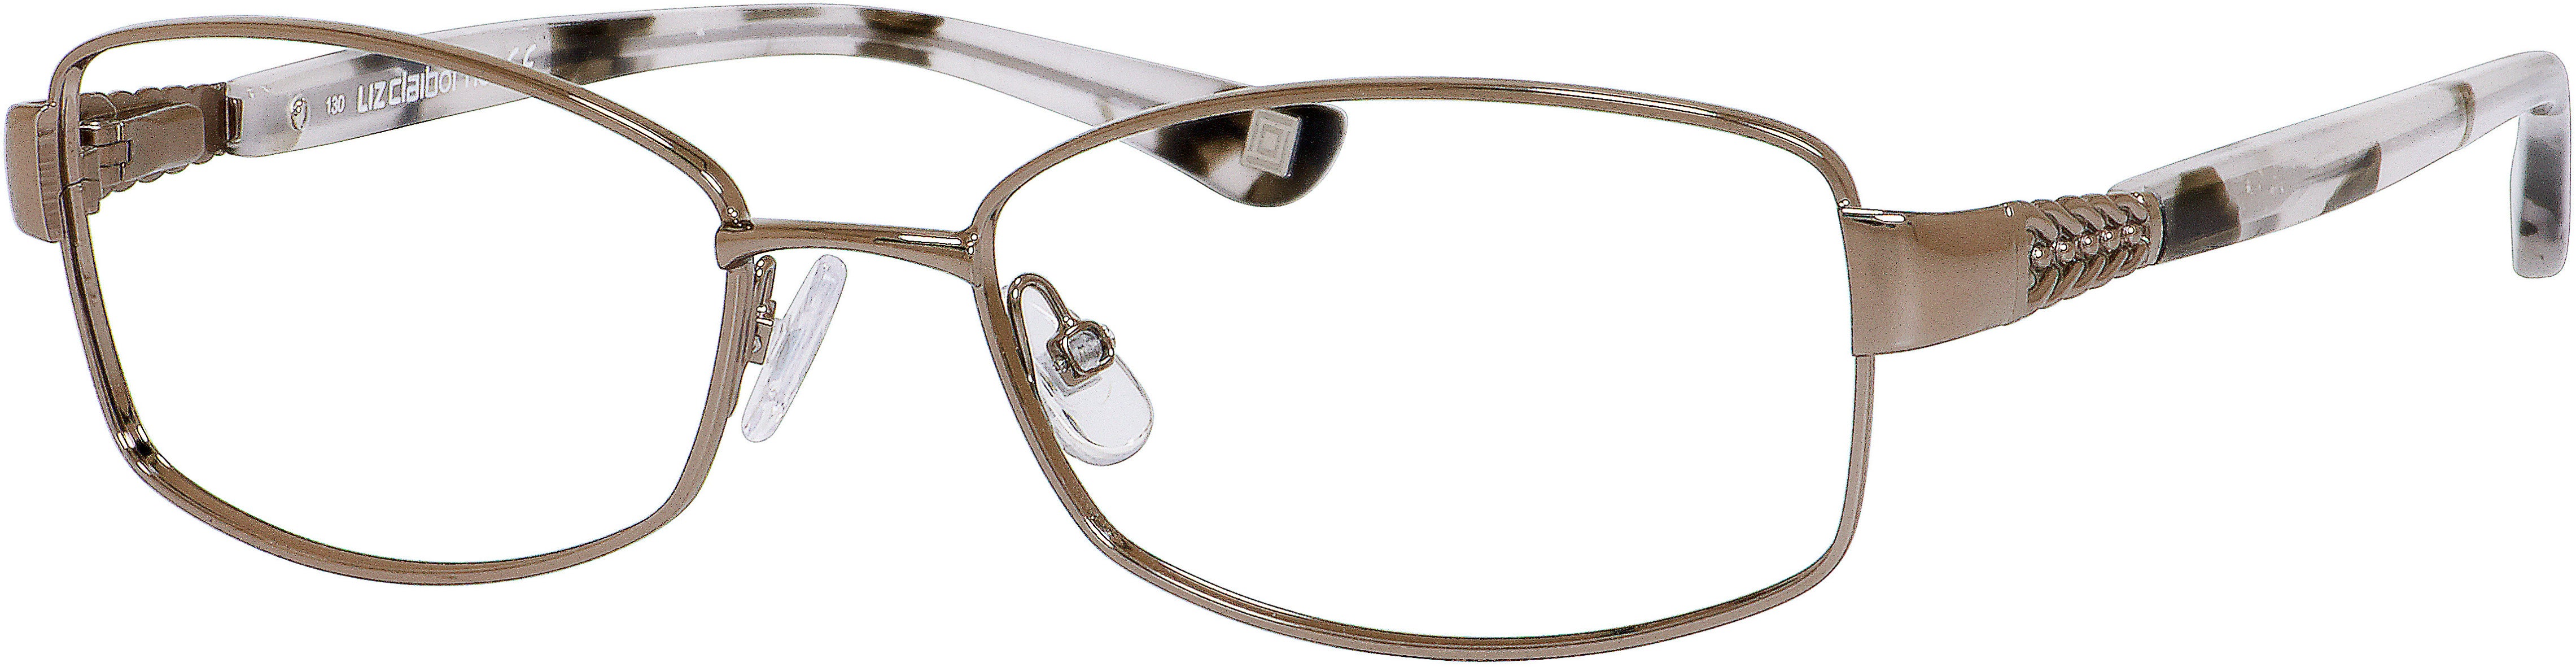  Liz Claiborne 610 Oval Modified Eyeglasses 0CT7-0CT7  Ruthenium (00 Demo Lens)